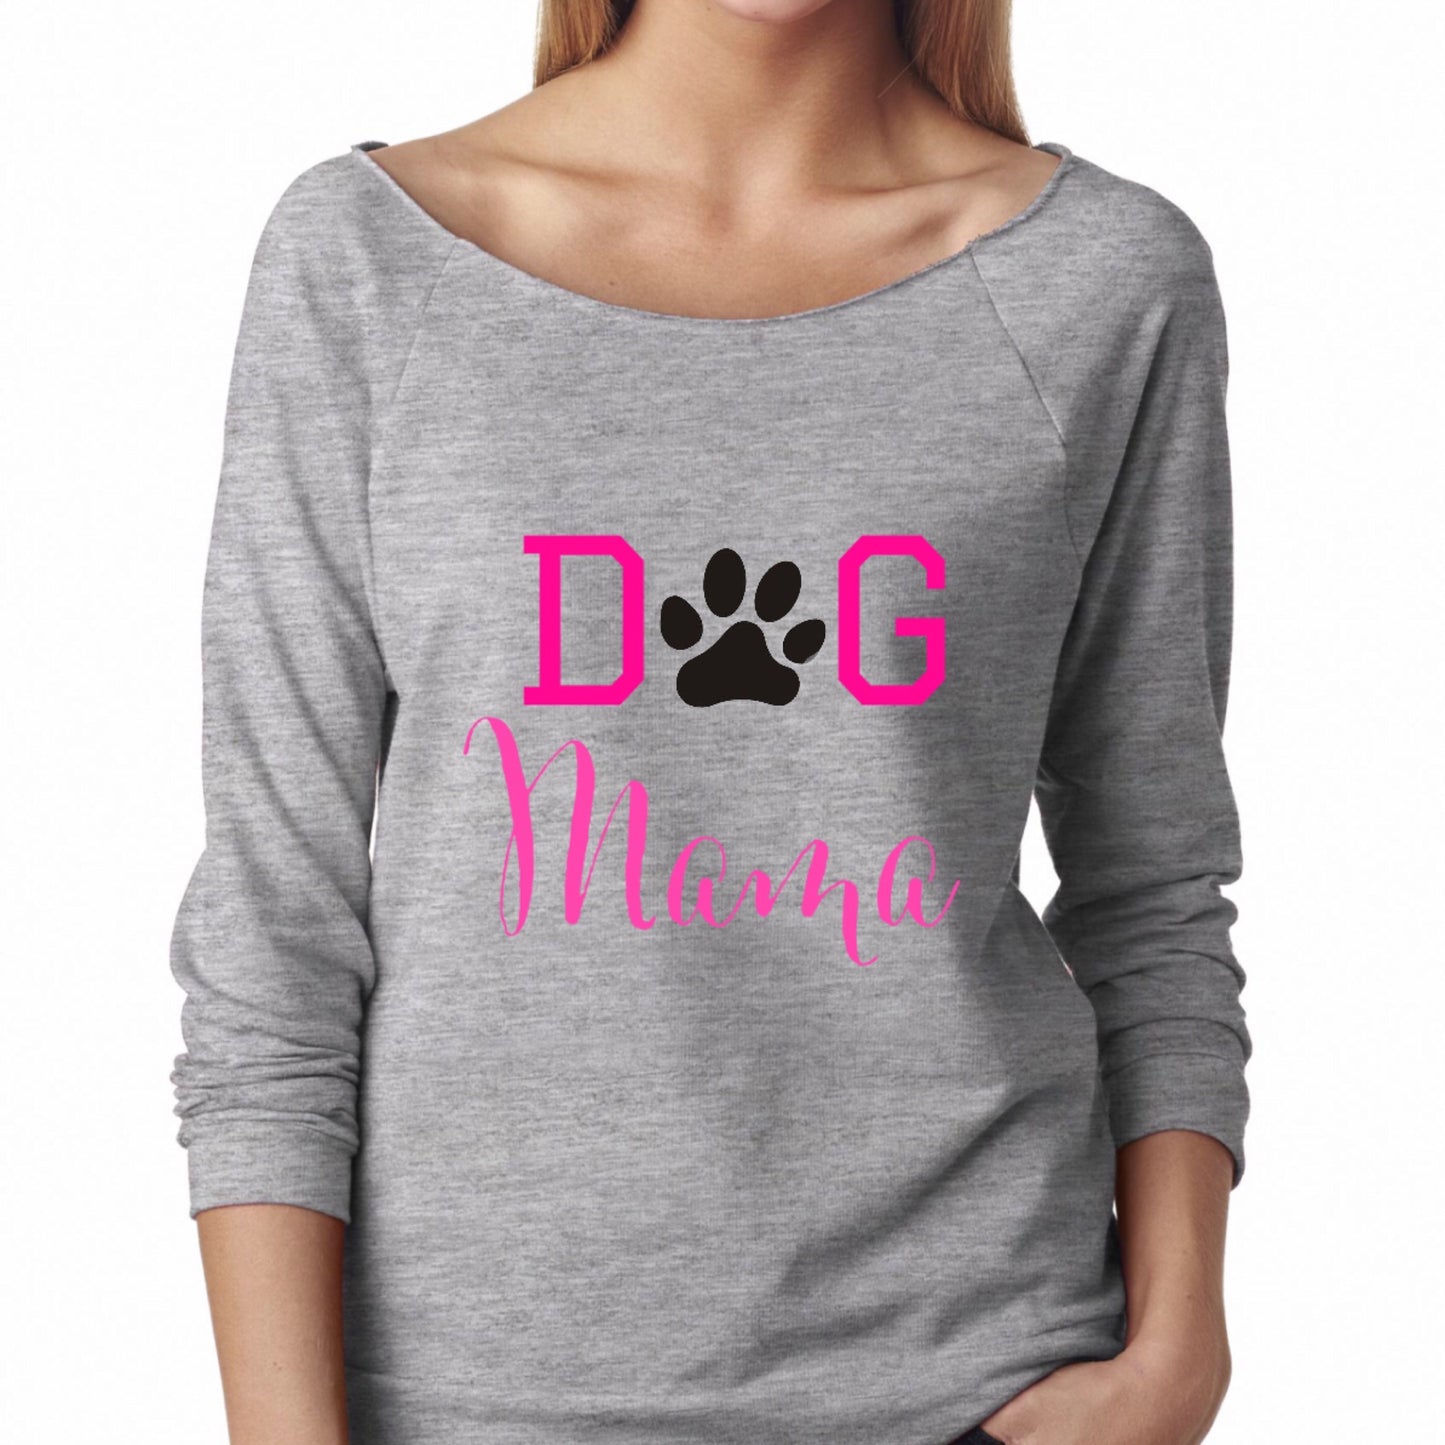 Dog mama shirt| Dog mom shirt| Dog lover shirt| Dog lover gift| Gift for her| Gift for Dog mom| Dogs before dudes t-shirt| Dog mama